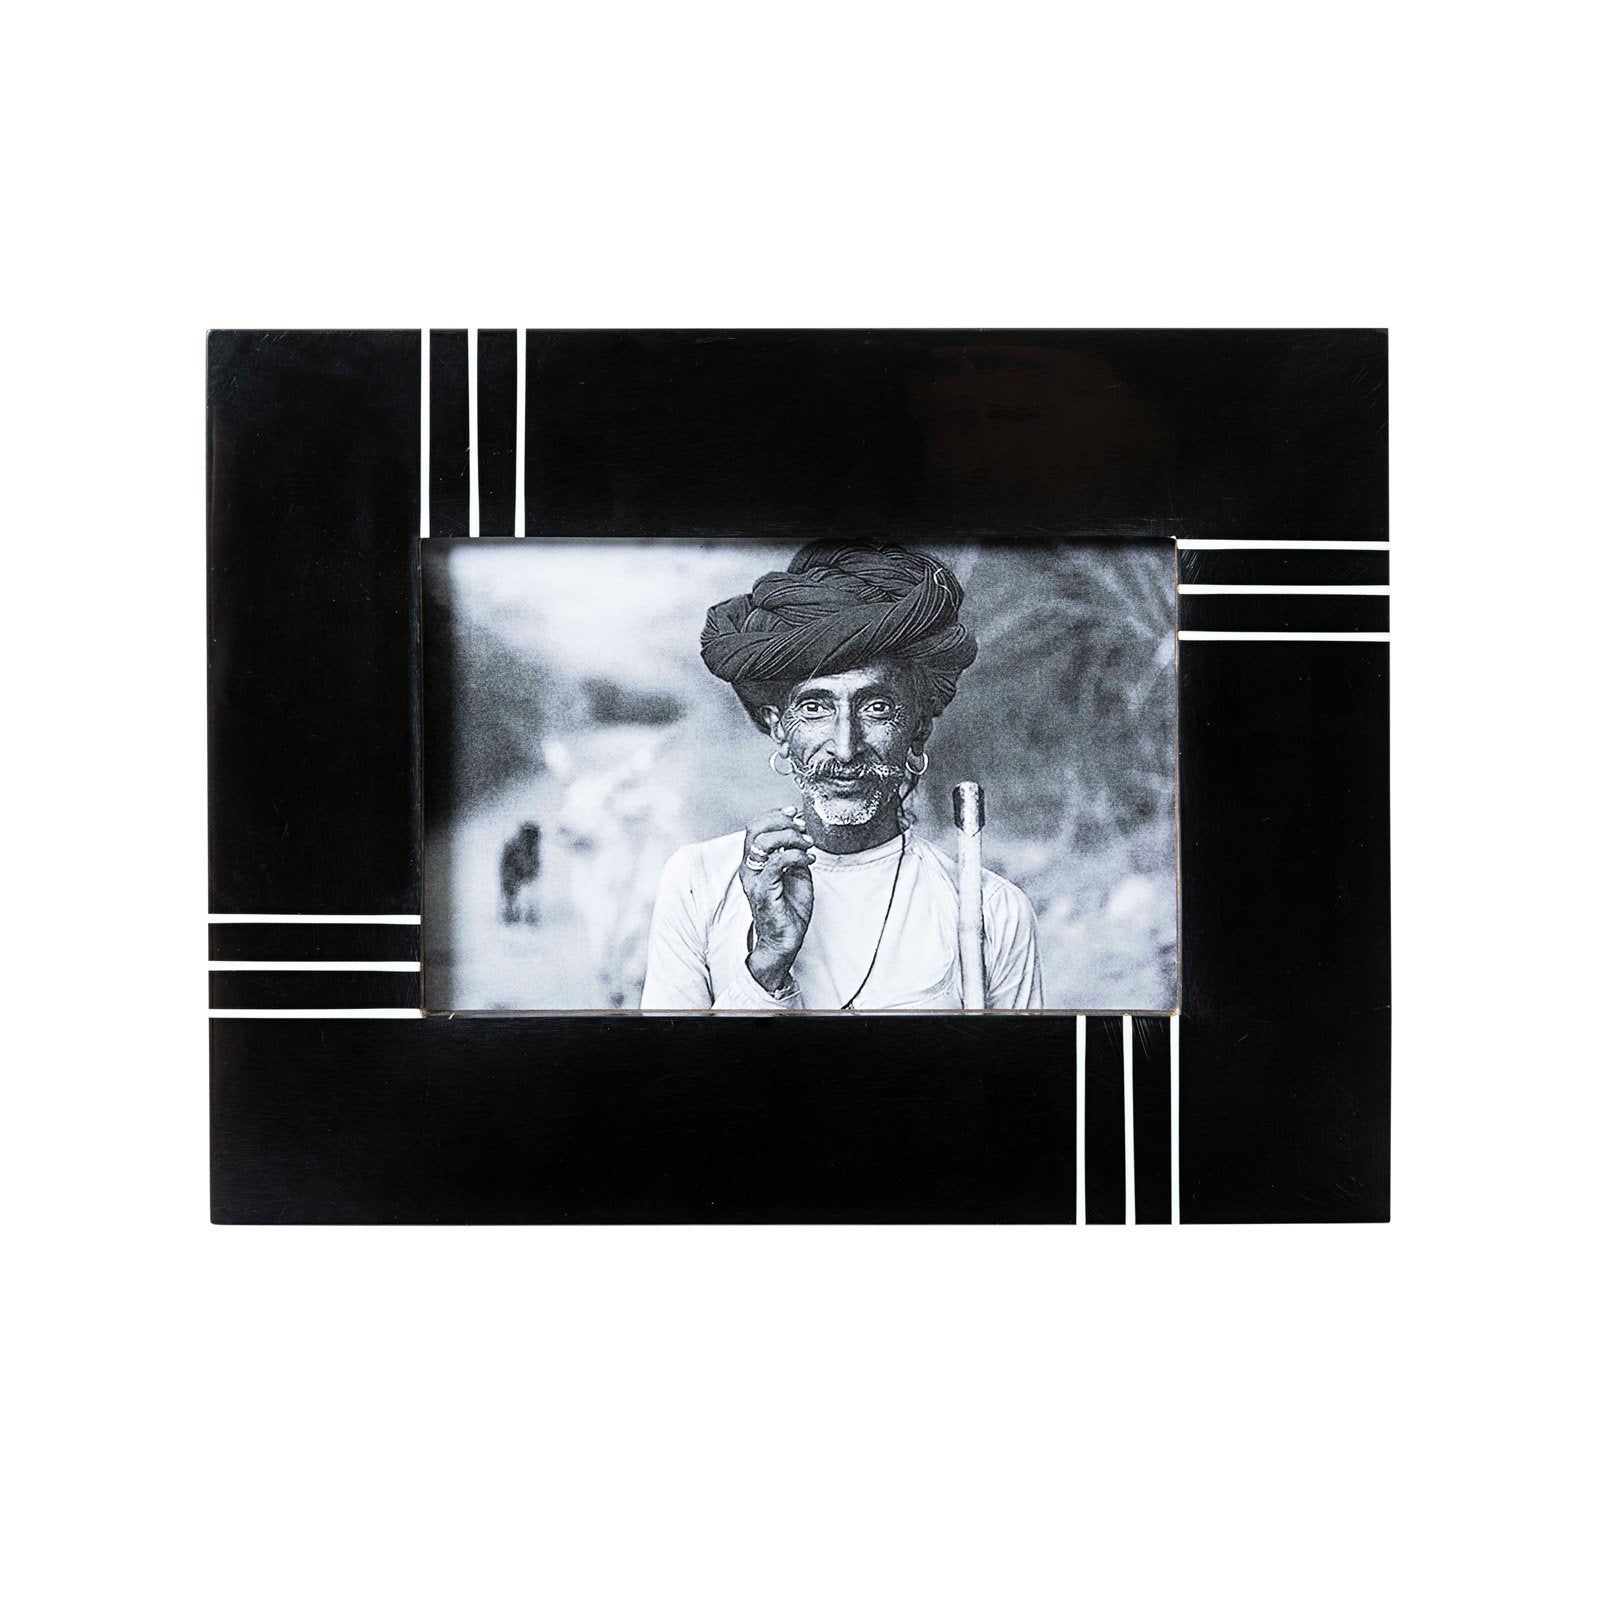 Mandishi Photo Frame 4 x 6 Black & White / 4 x 6"